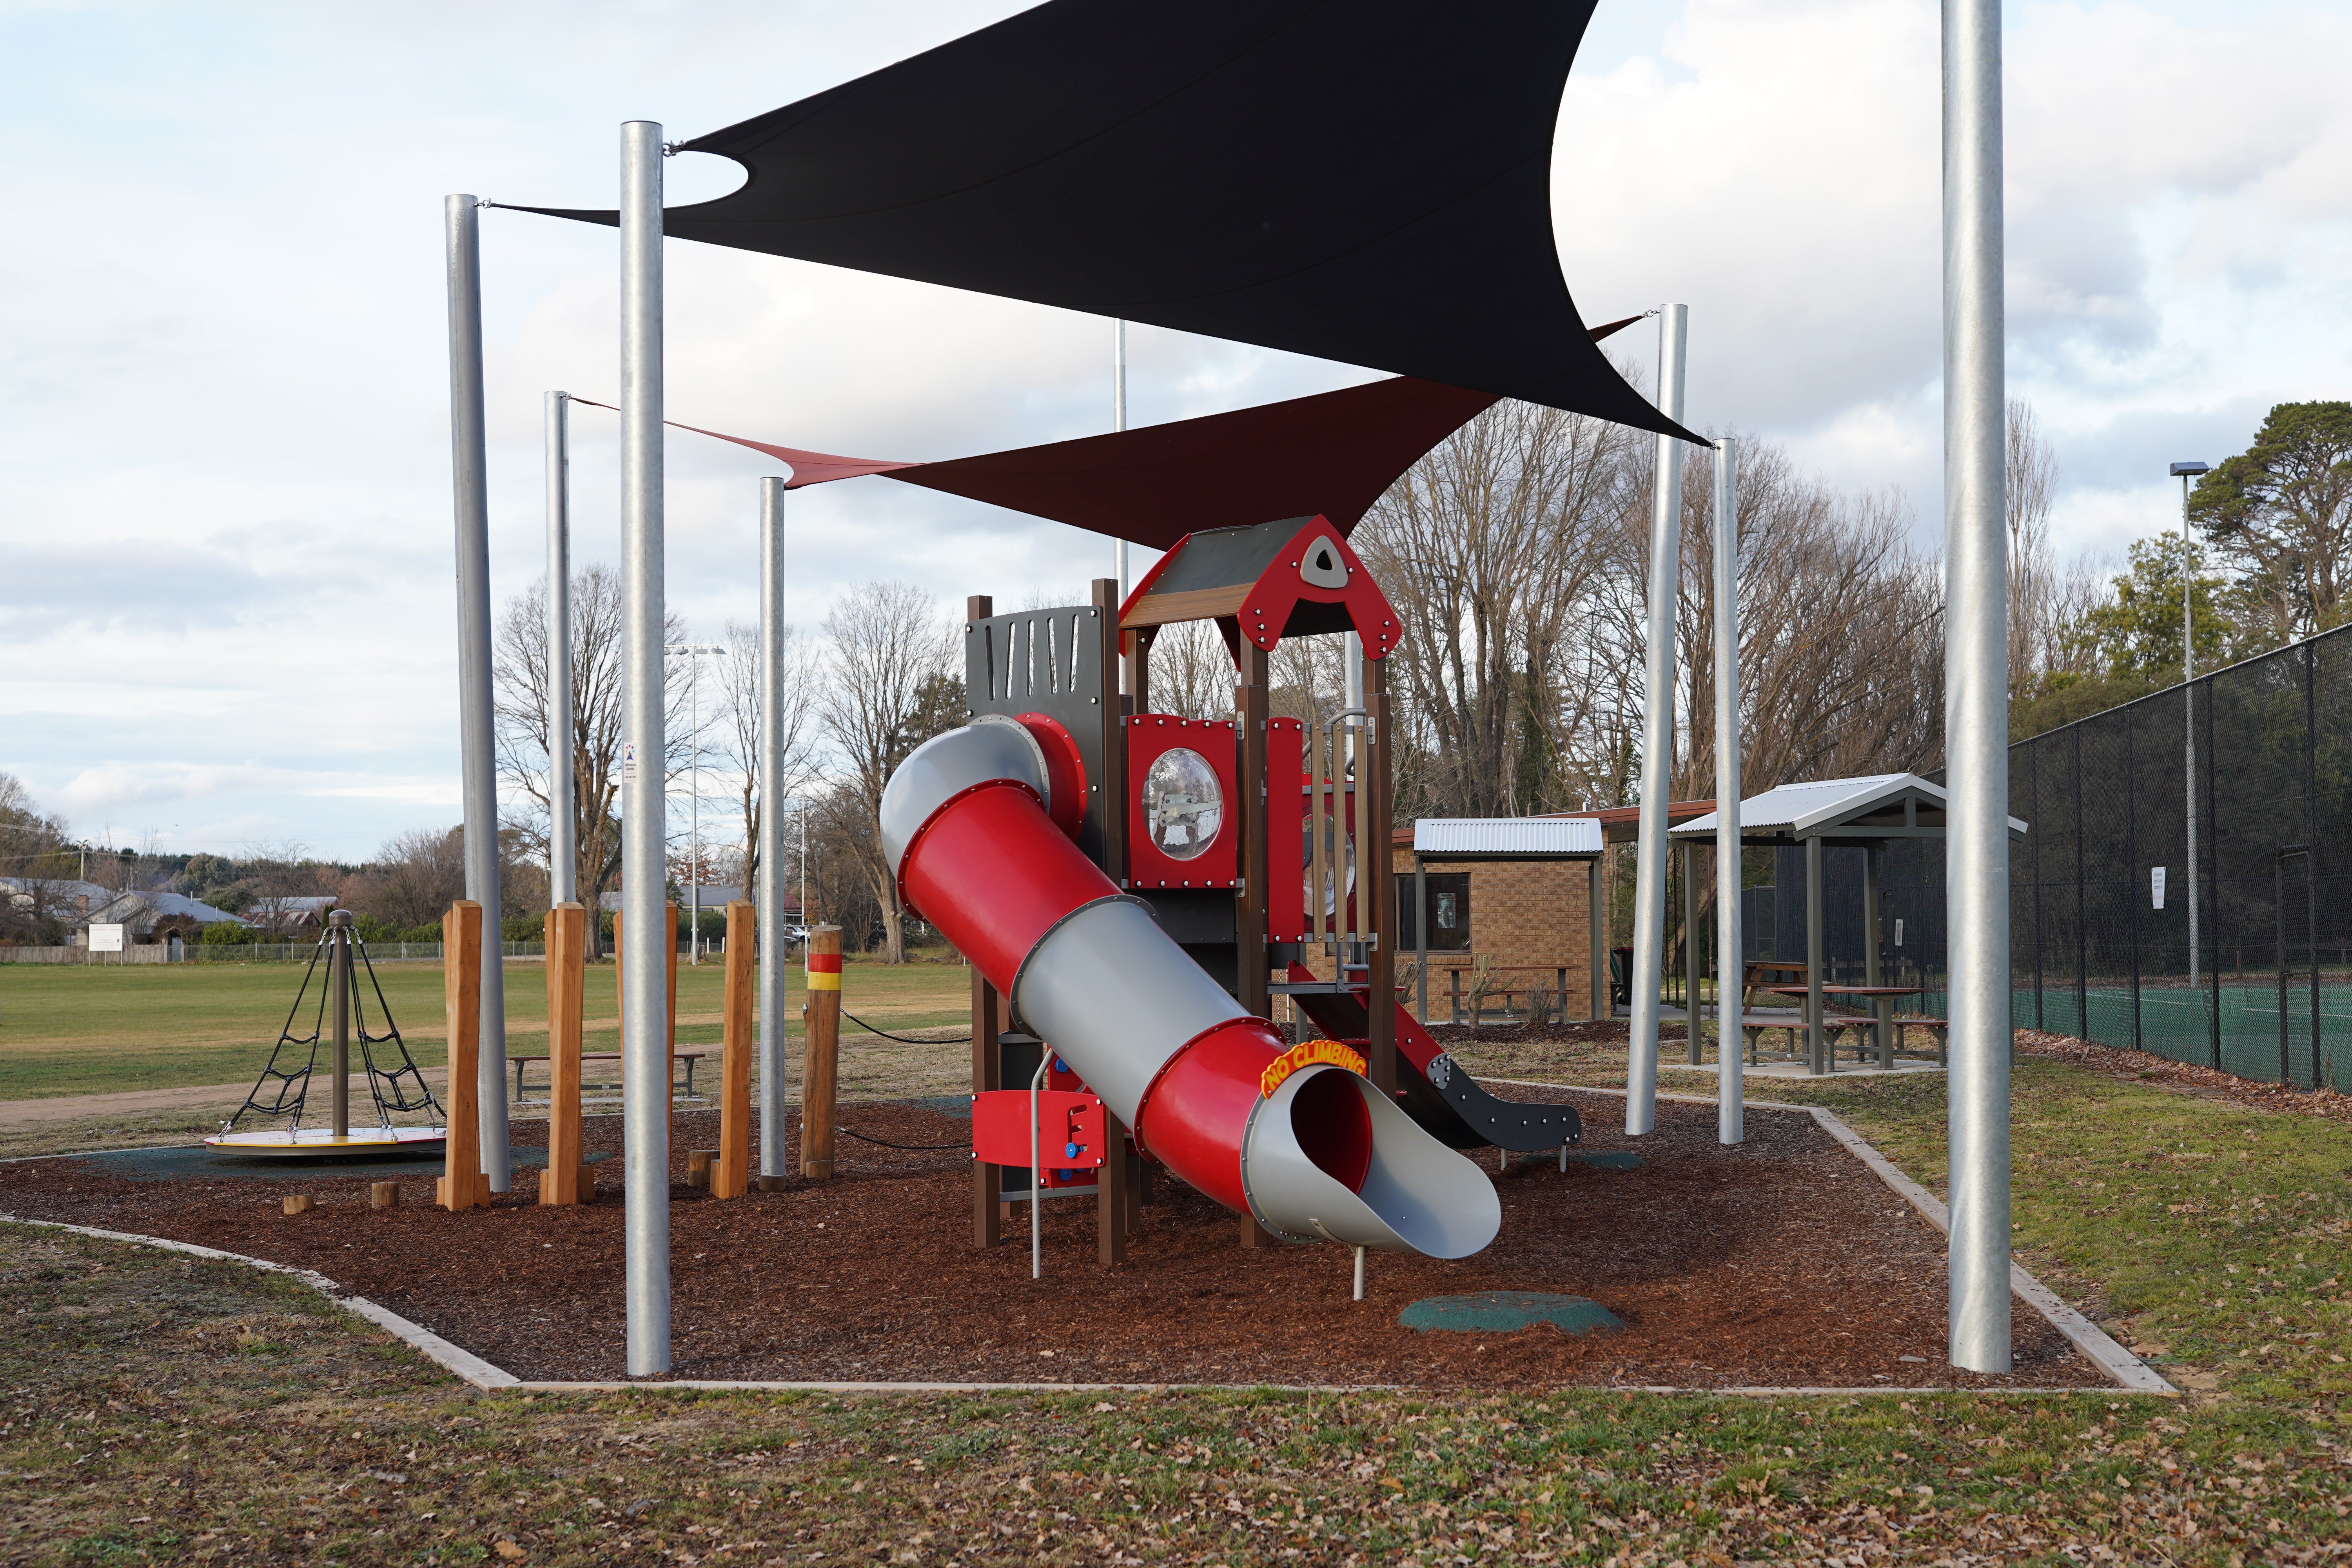 Braidwood Recreation Grounds and Playground - Accommodation Kalgoorlie